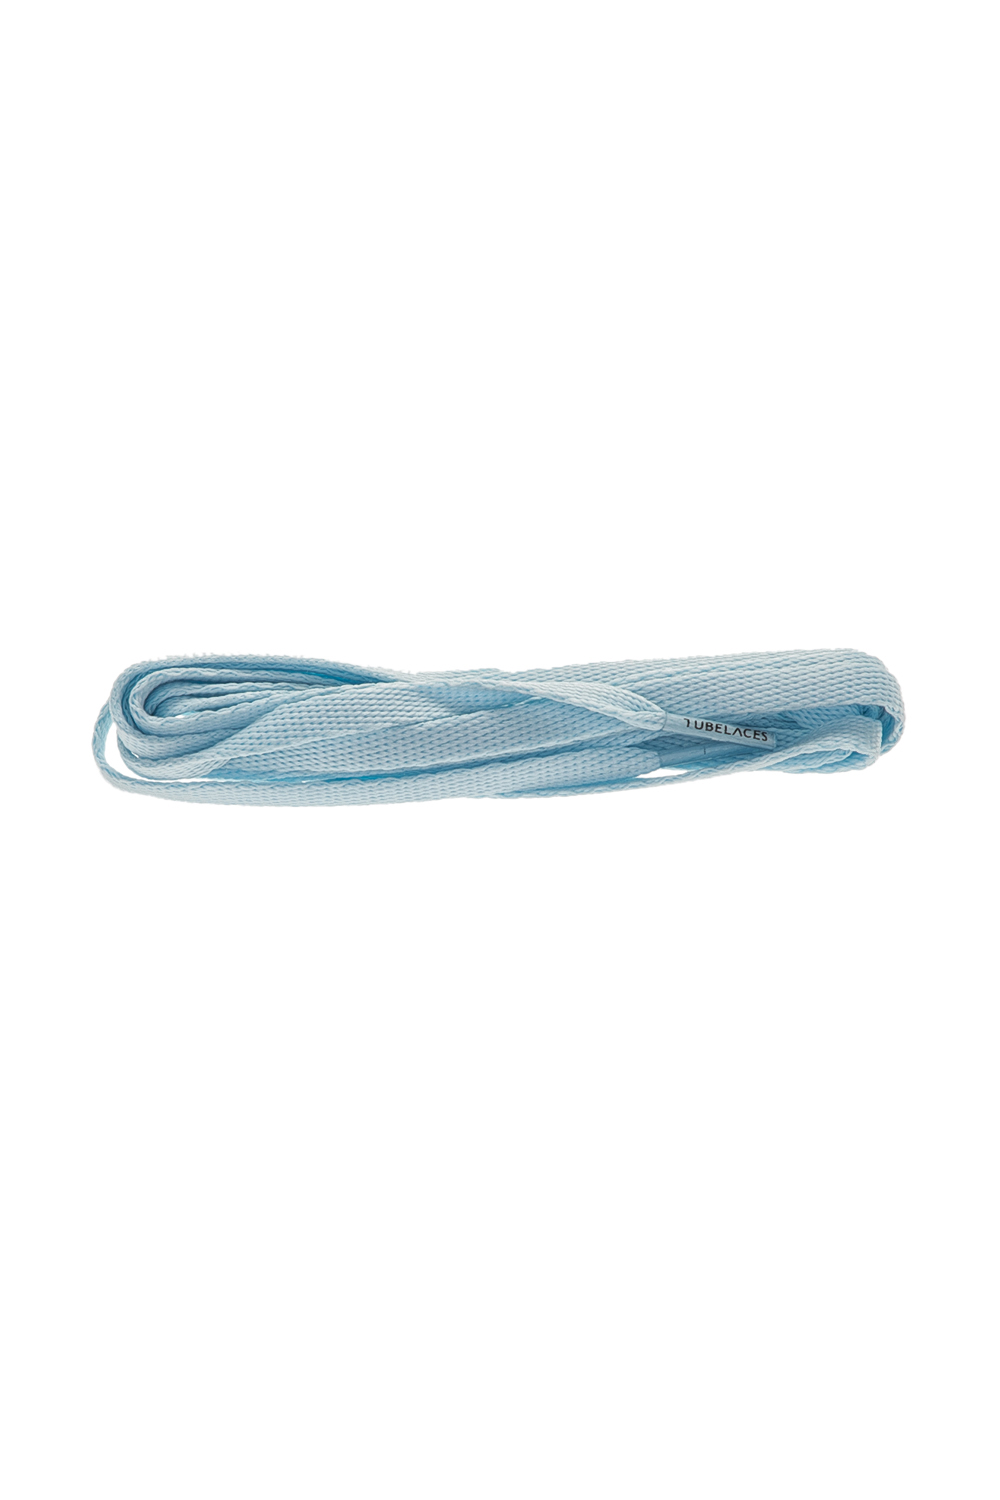 TUBELACES – Unisex κορδόνια TUBELACES WHITE FLAT γαλάζια 1670412.0-0035